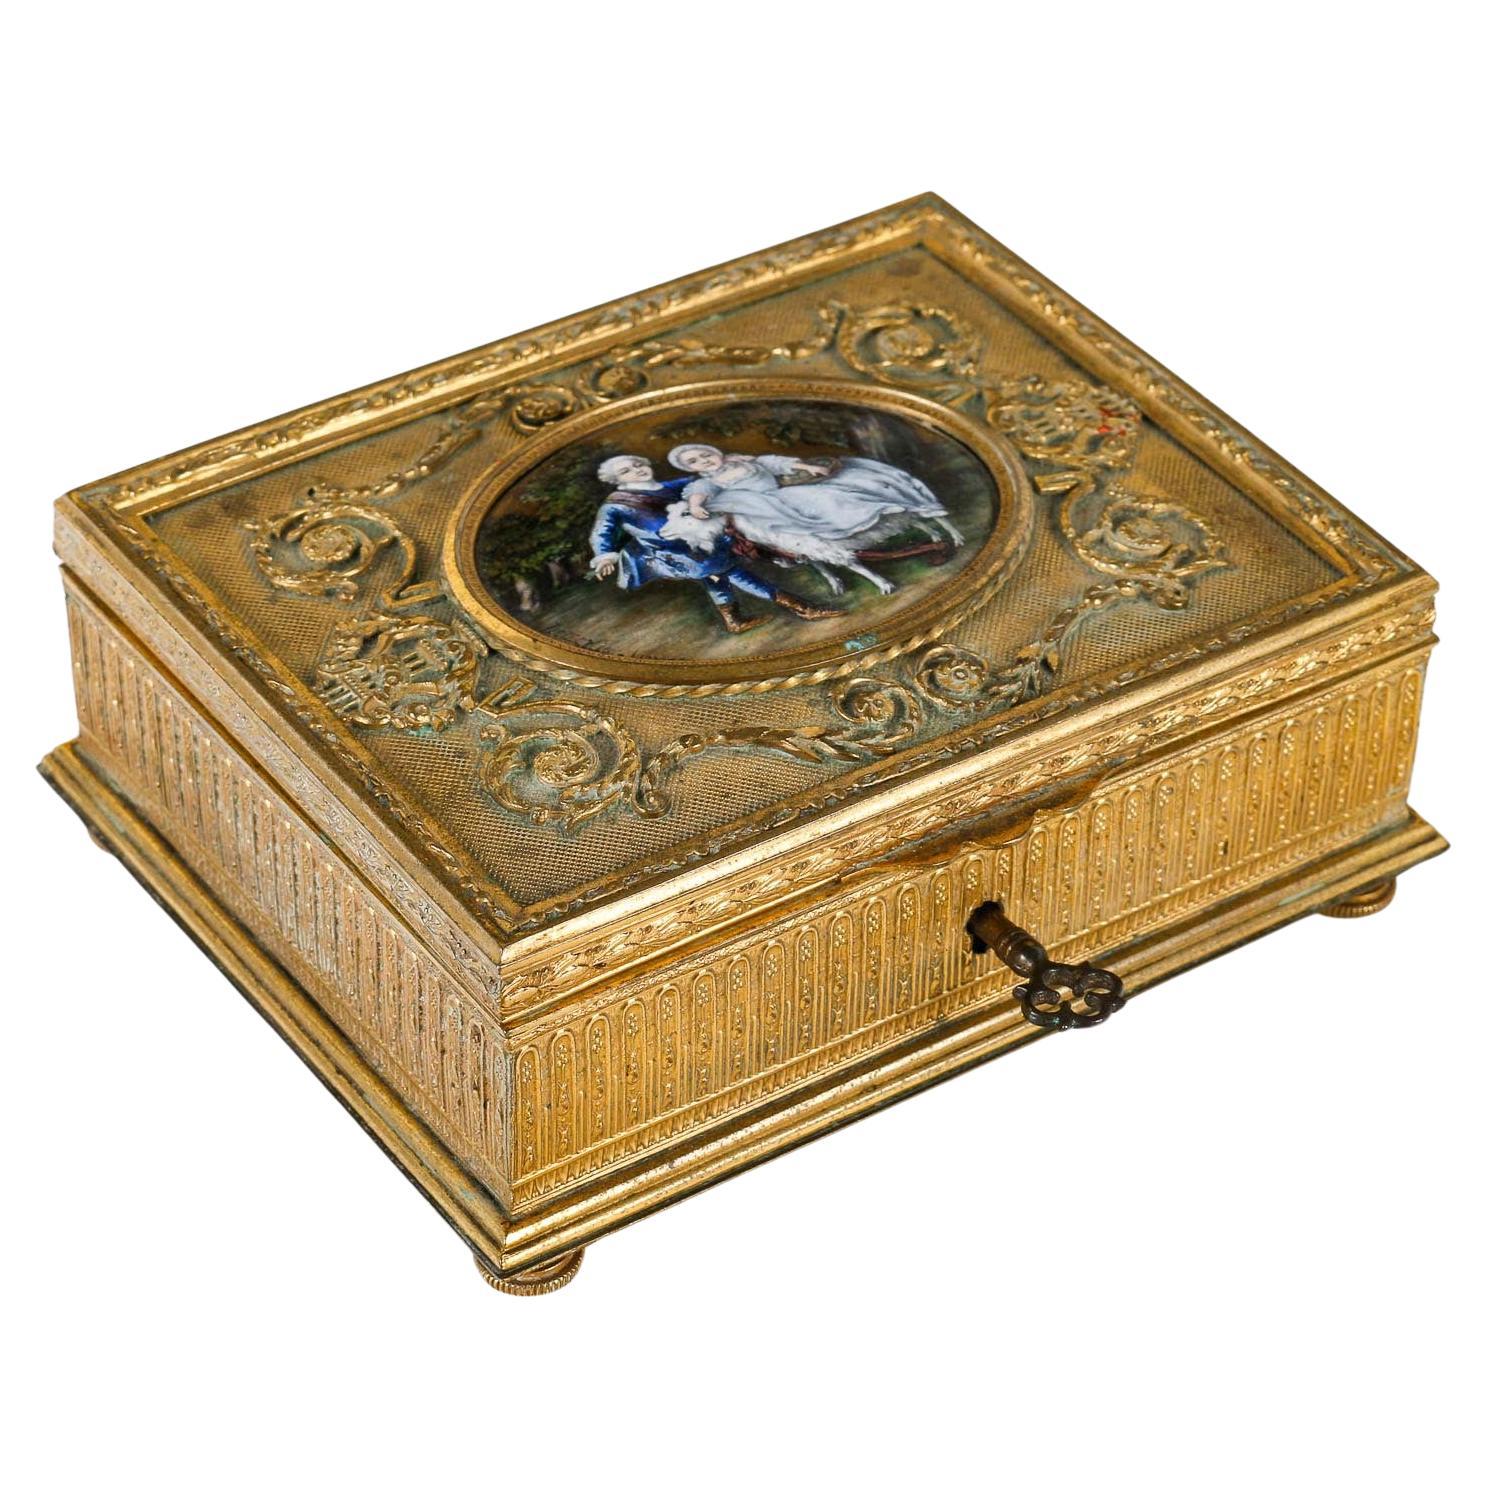 Chased and Gilt Bronze Box, Napoleon III Period.